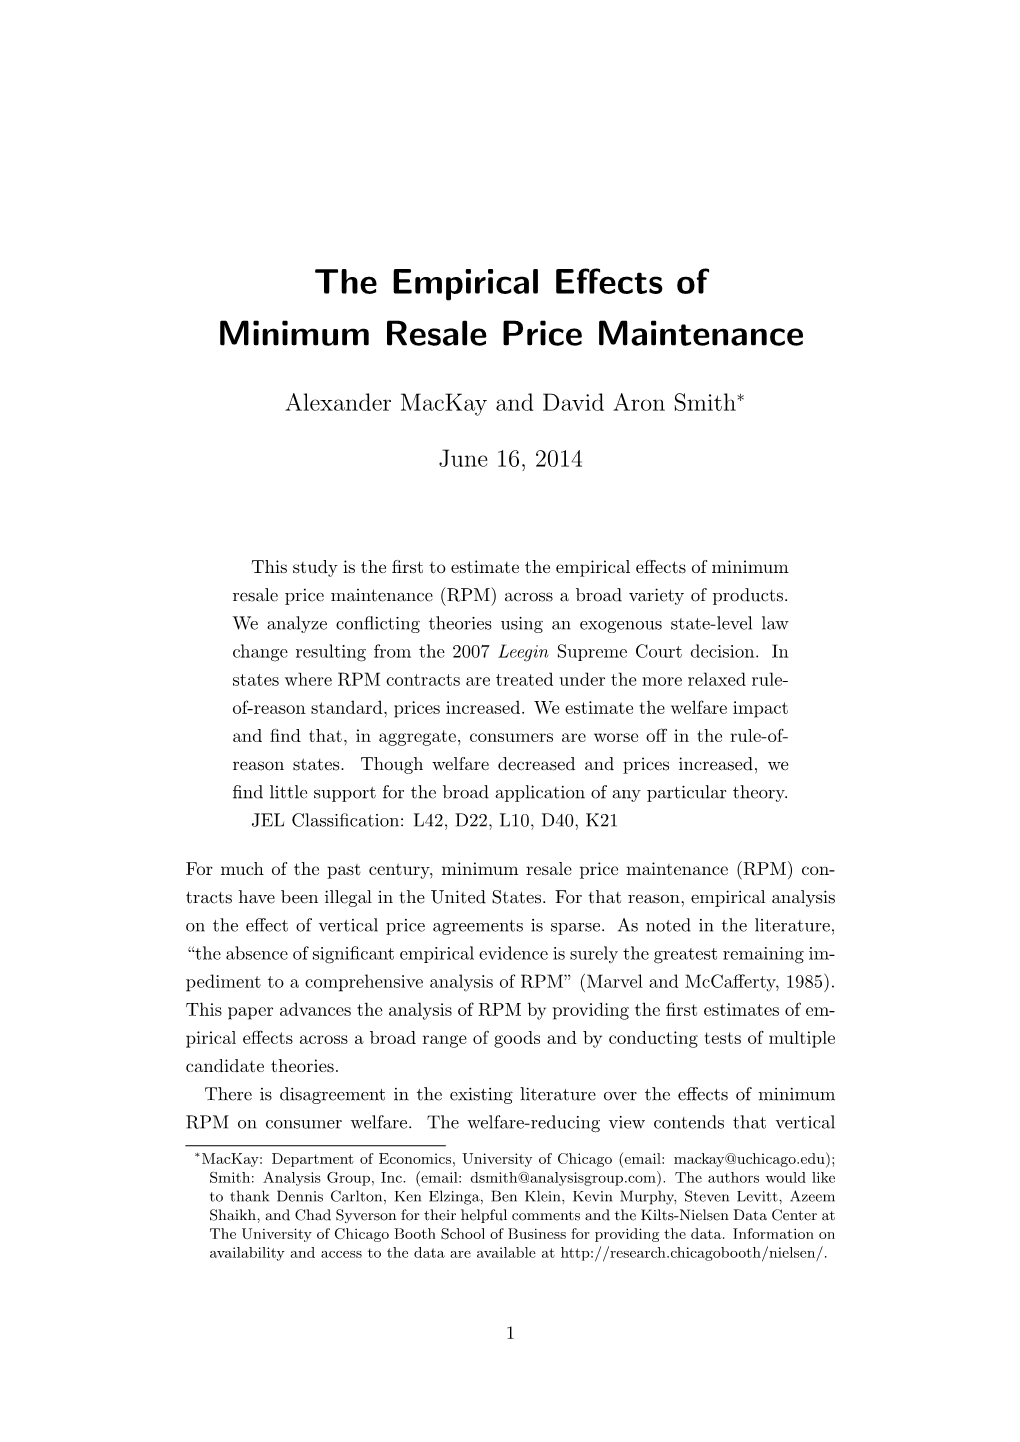 The Empirical Effects of Minimum Resale Price Maintenance